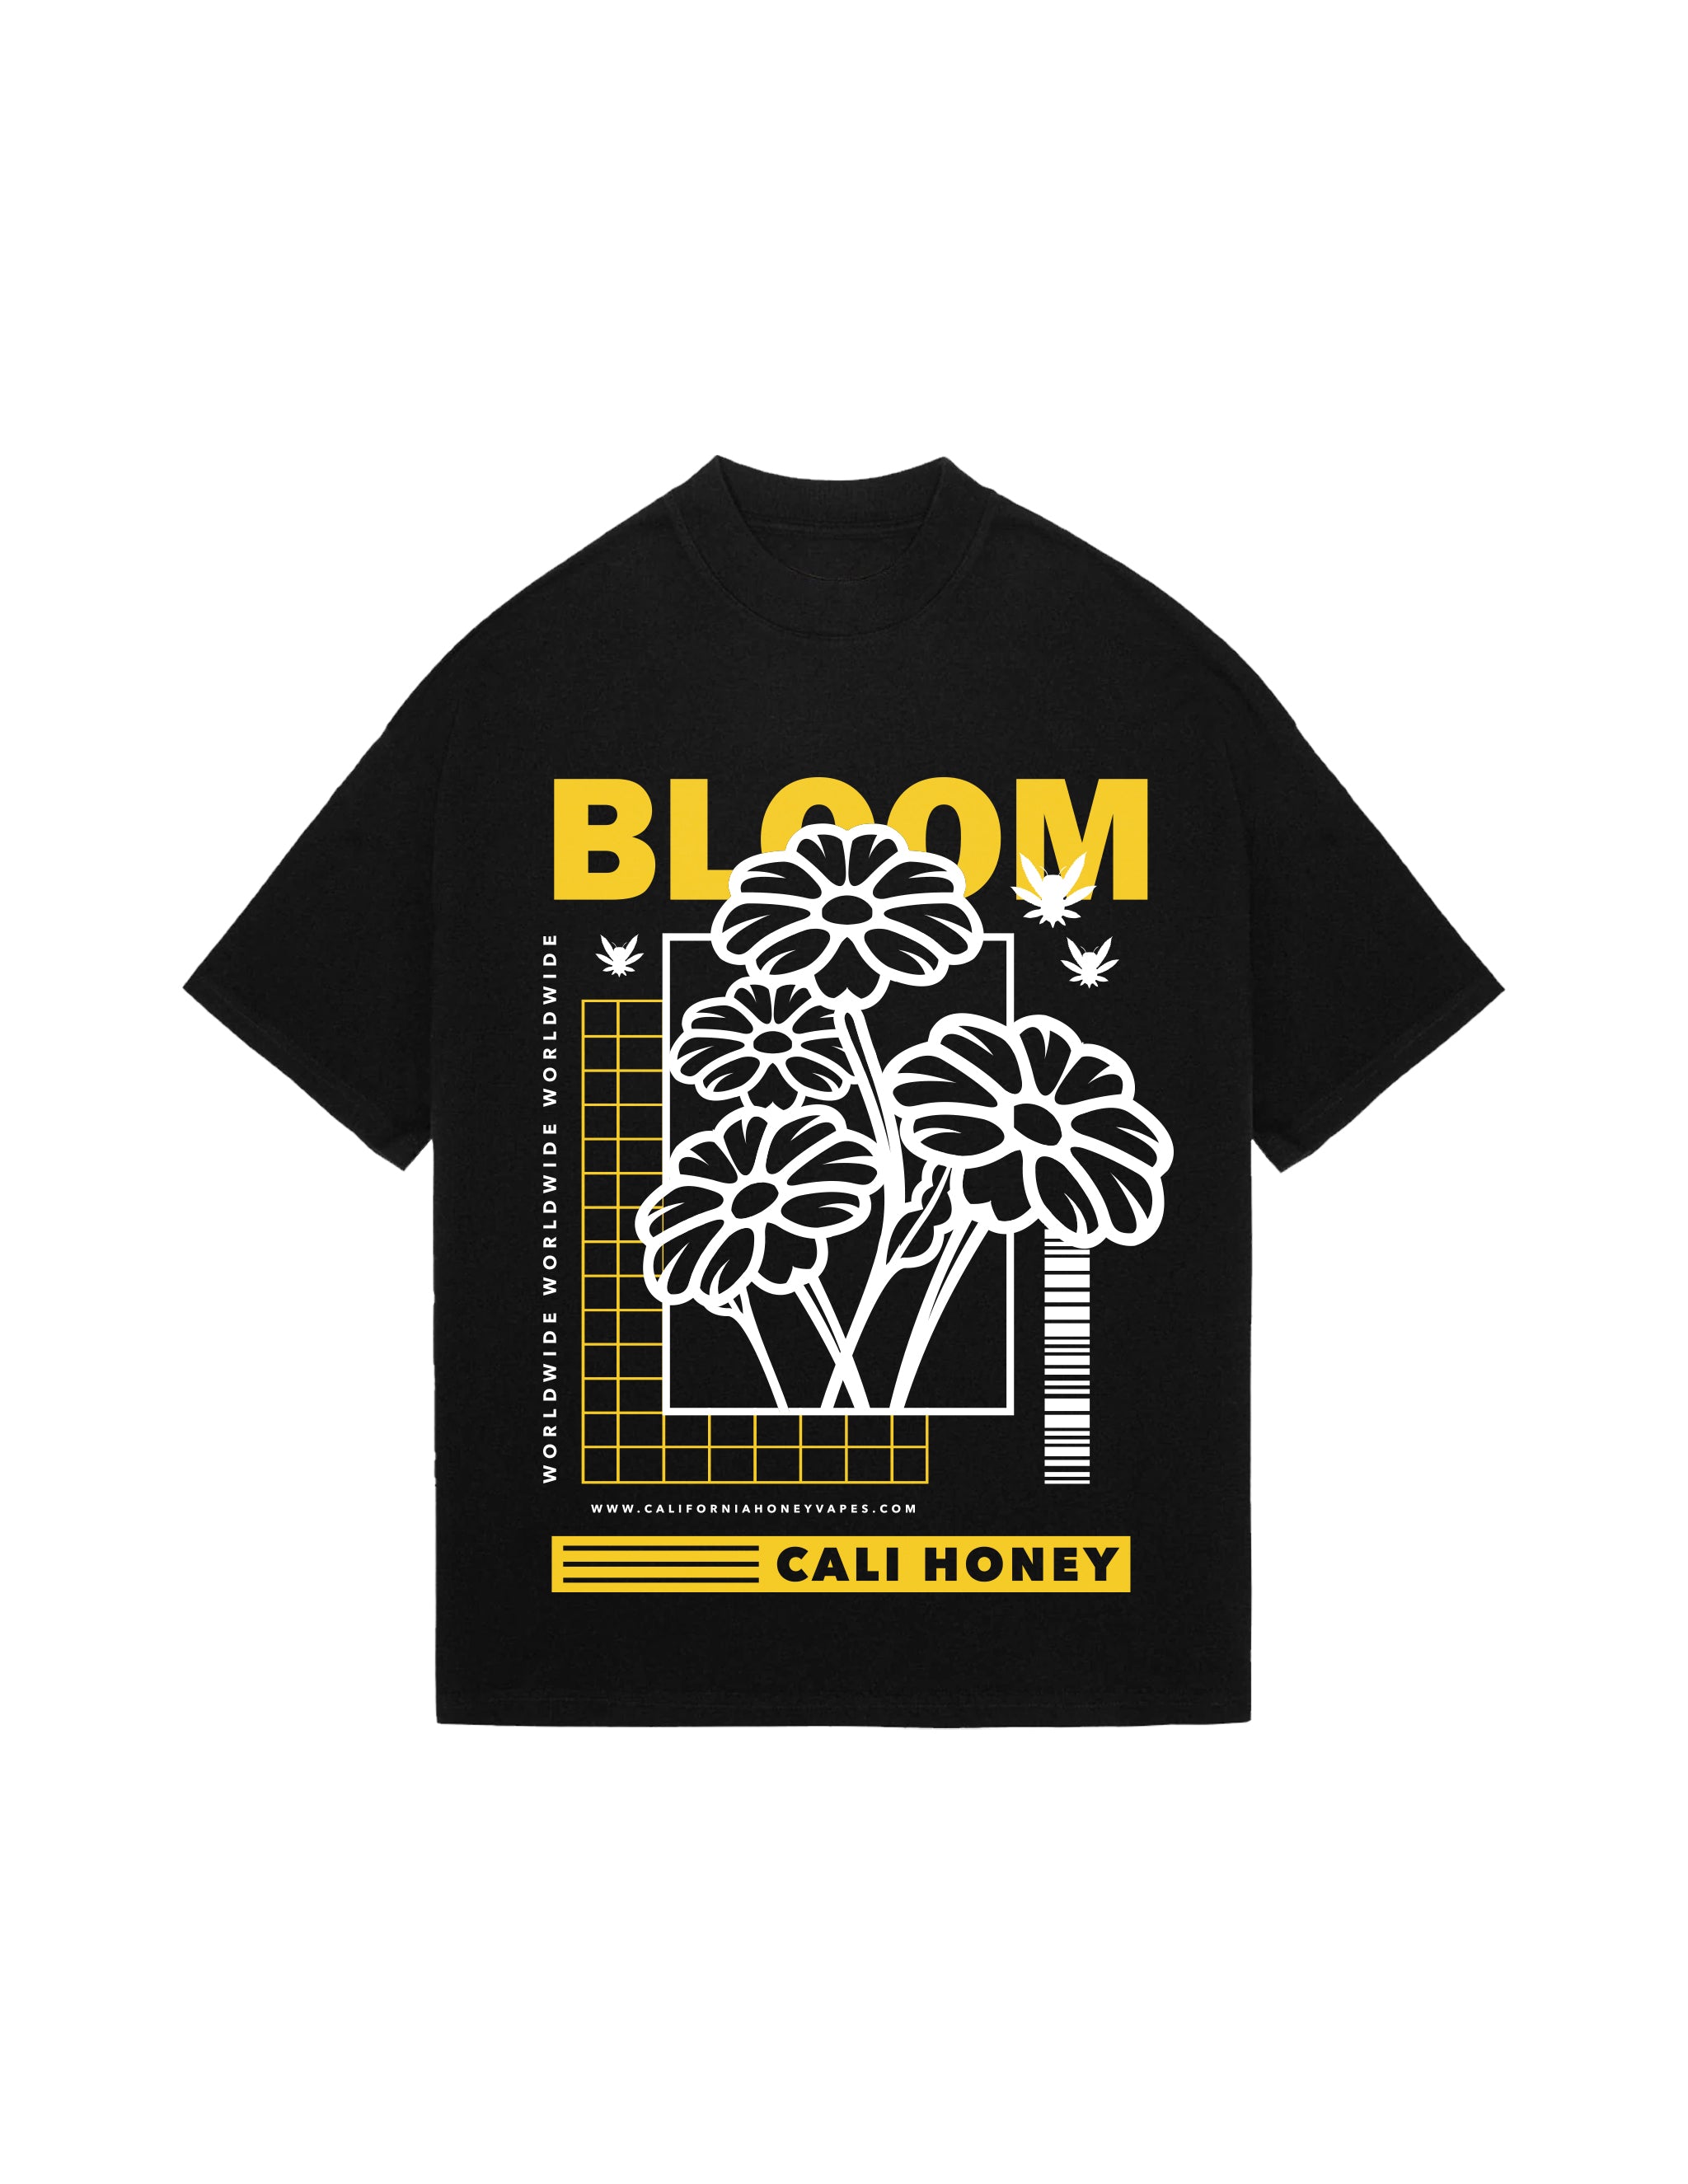 Bloom T-Shirt Black w Yellow